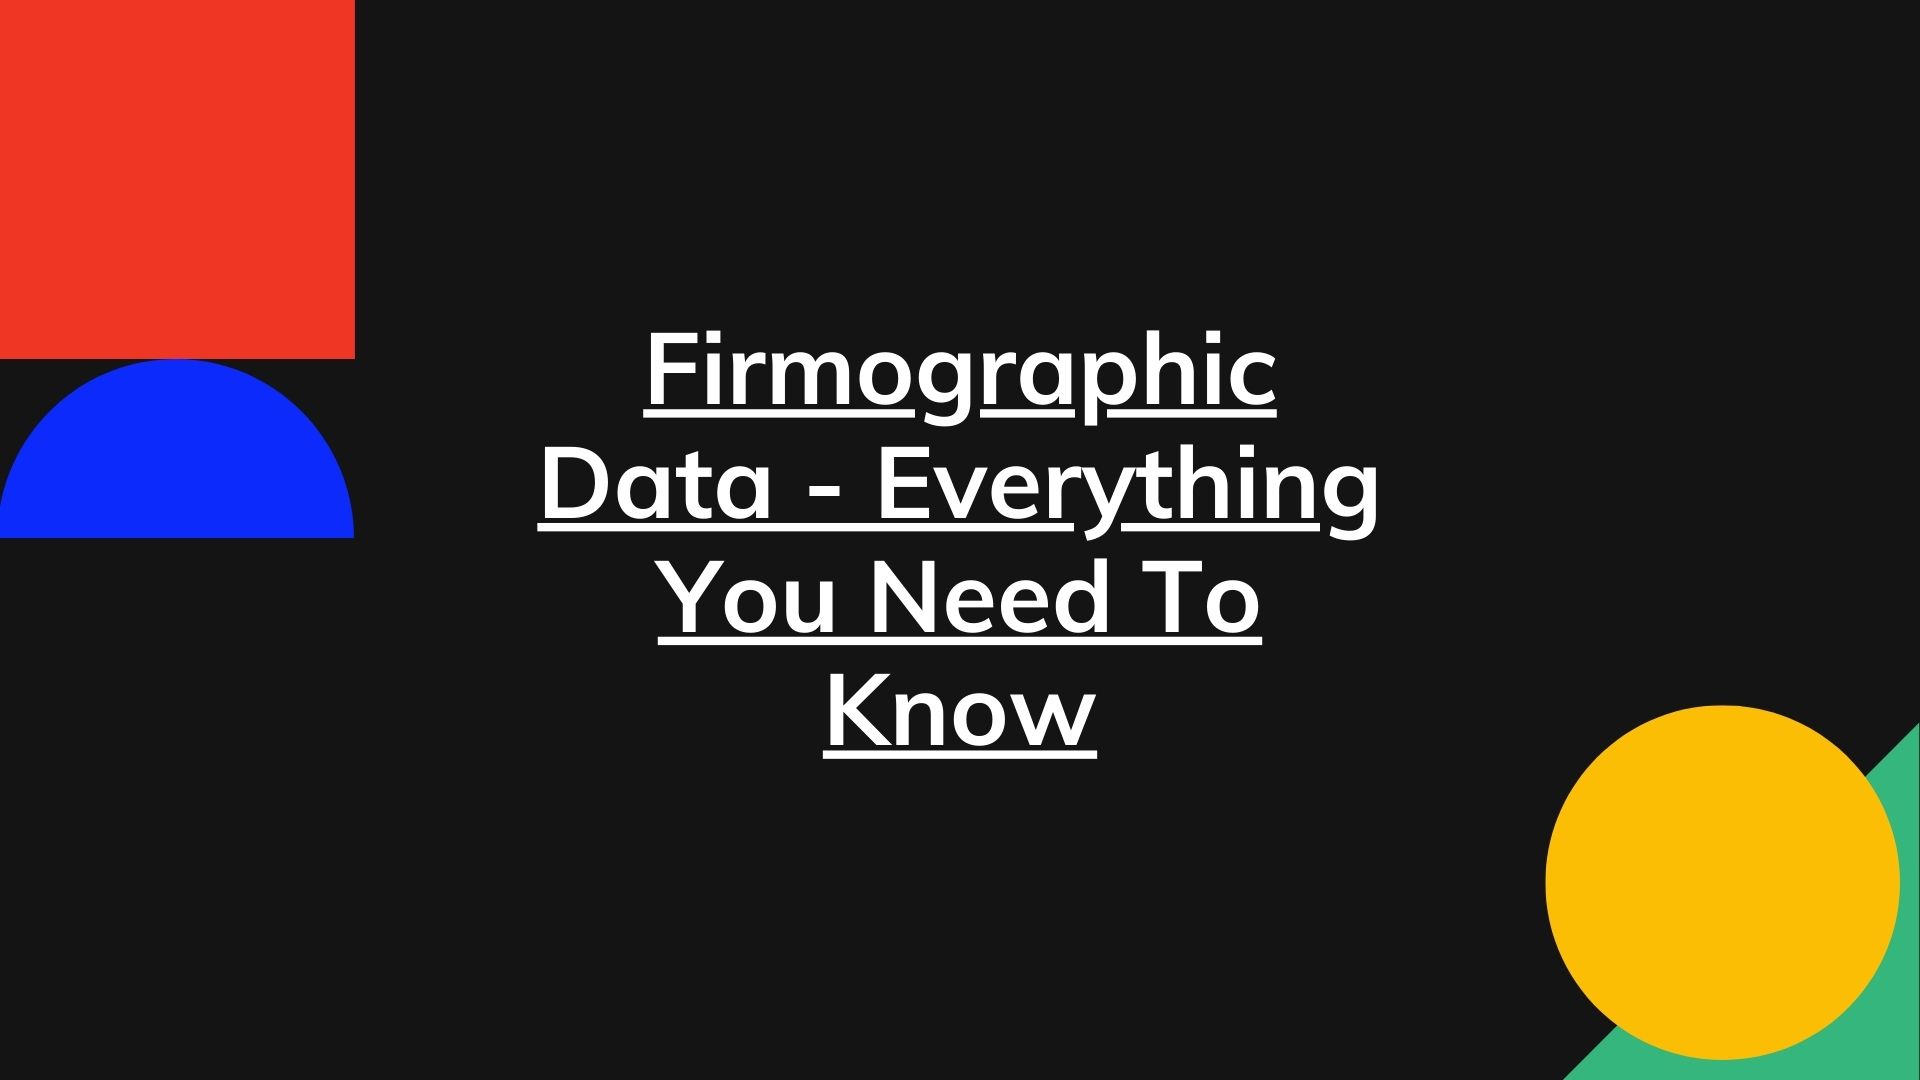 Firmographic data